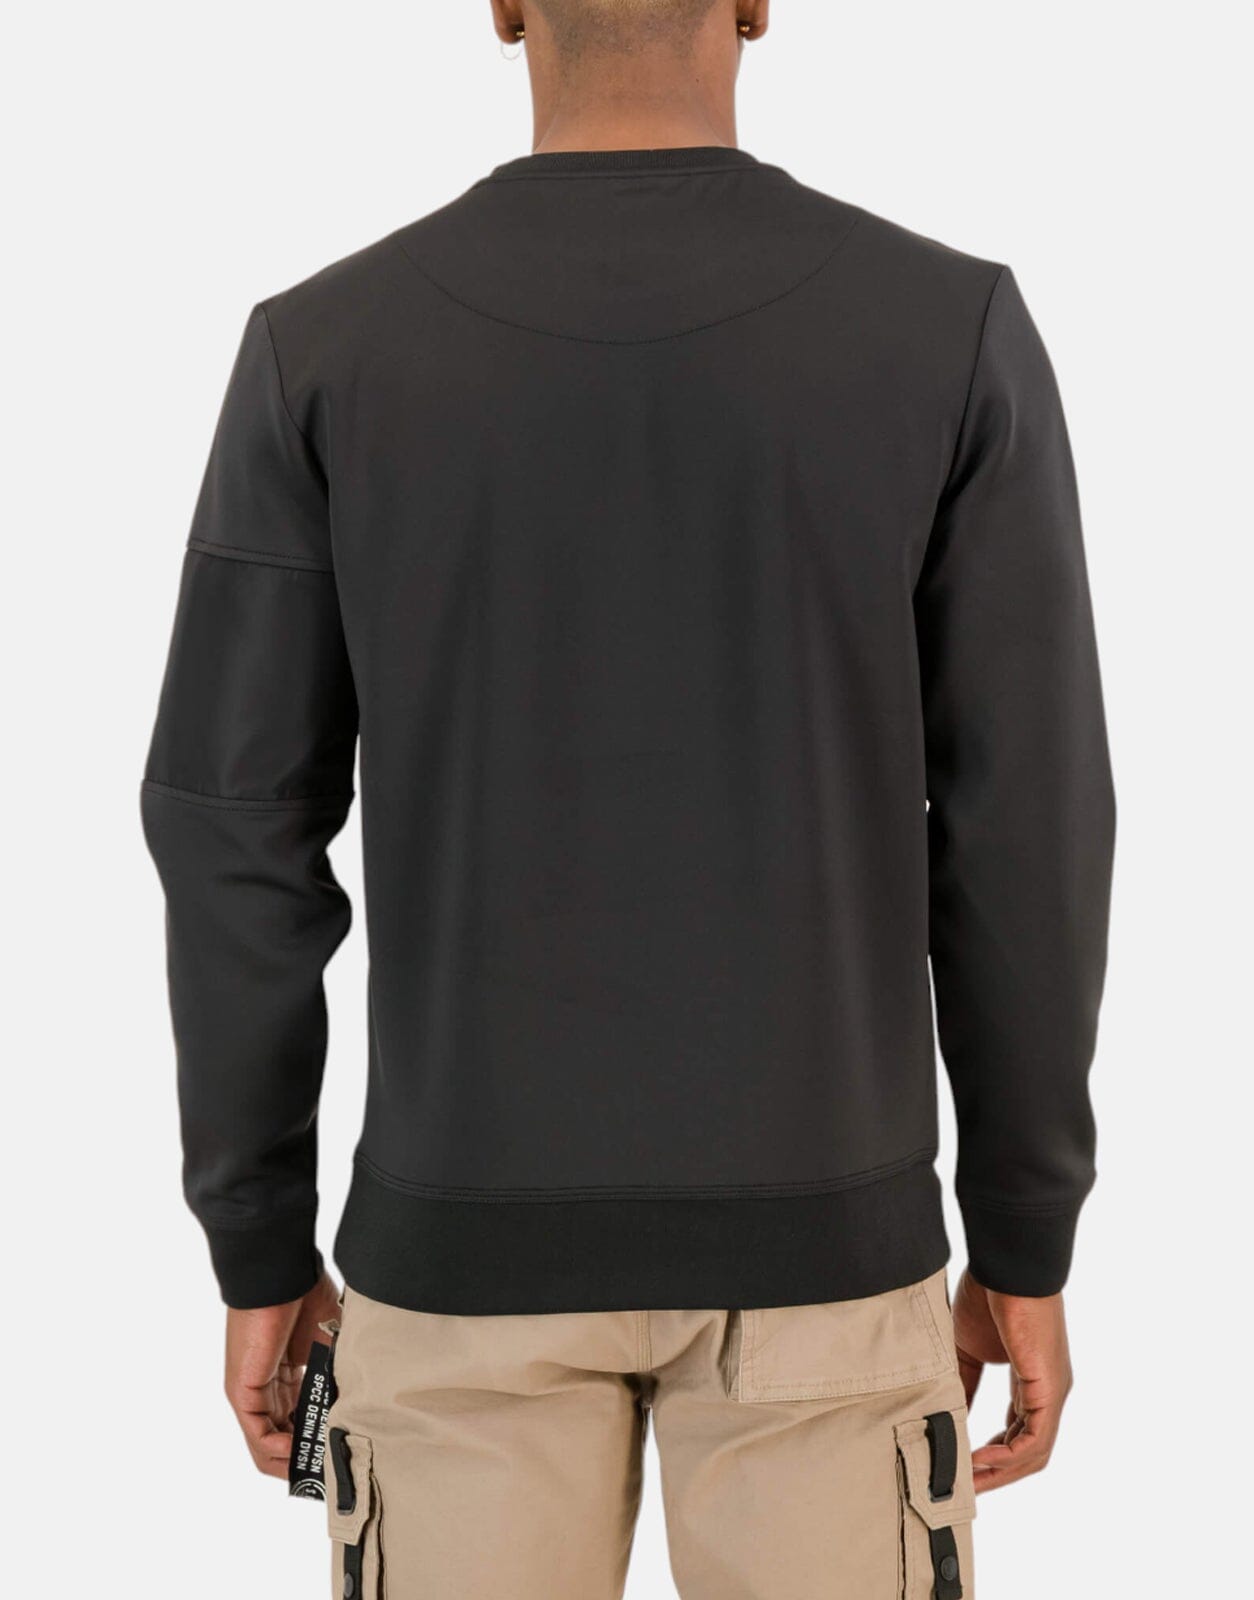 SPCC Bolen Black Sweatshirt - Subwear